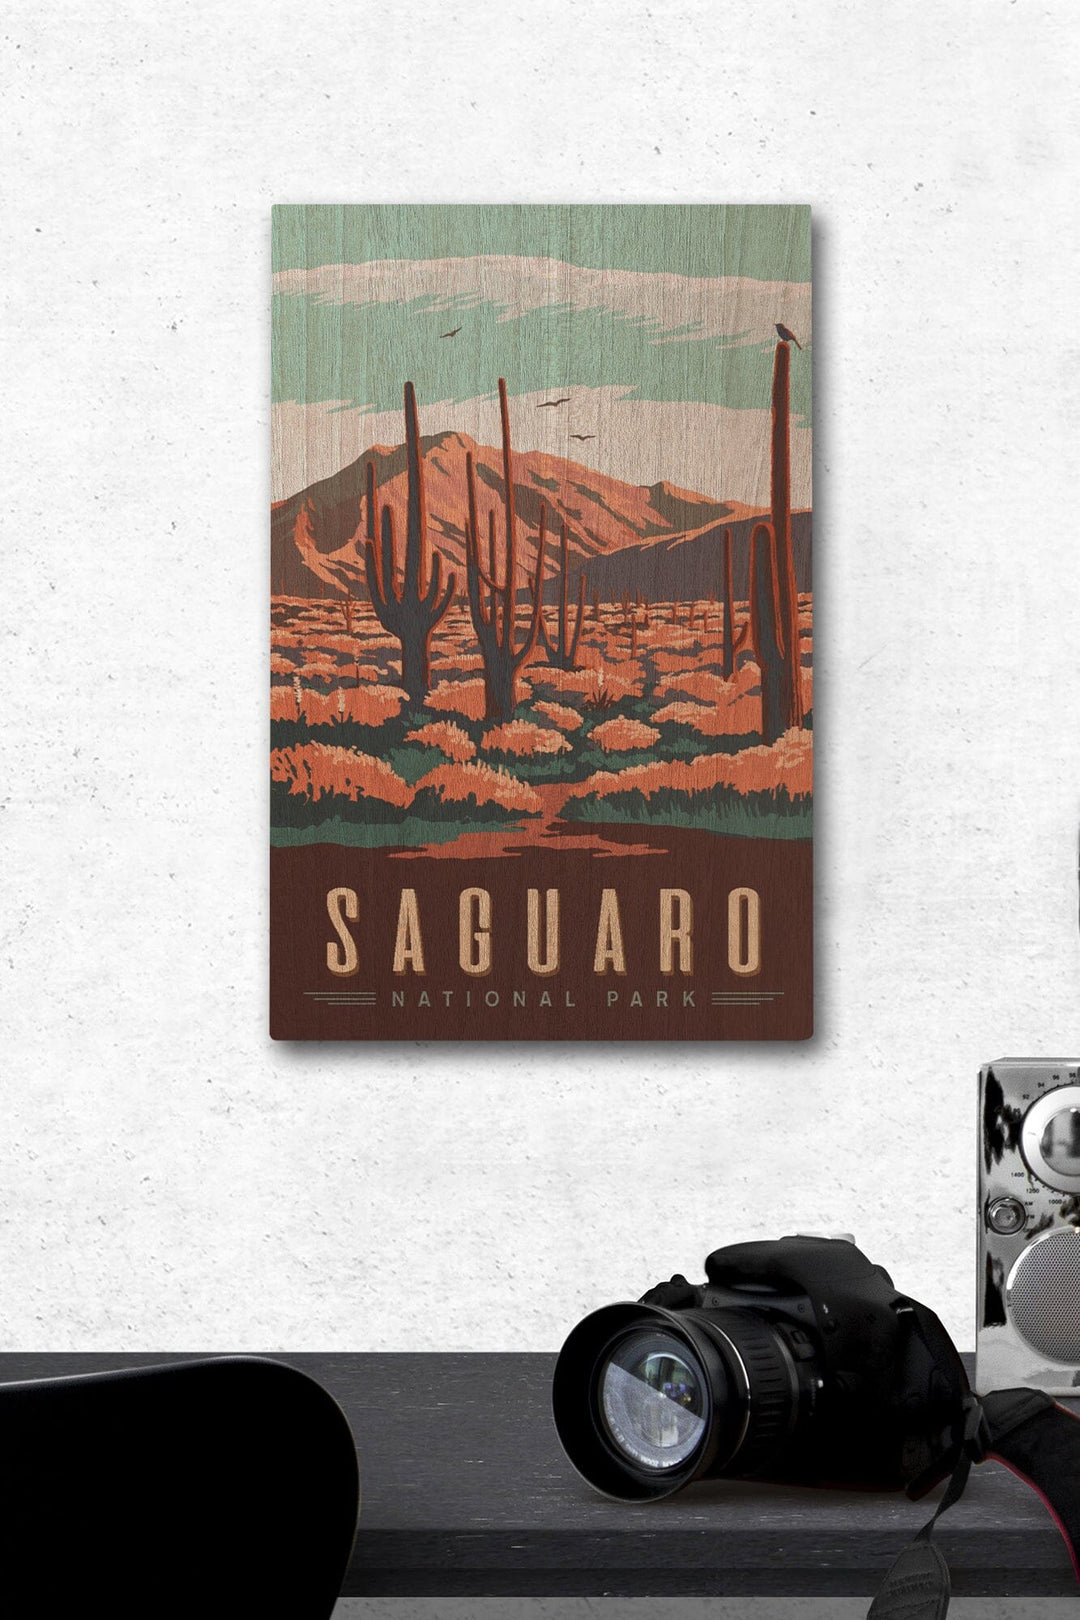 Saguaro National Park, Desert Scene with Cactus, Lantern Press Artwork, Wood Signs and Postcards Wood Lantern Press 12 x 18 Wood Gallery Print 